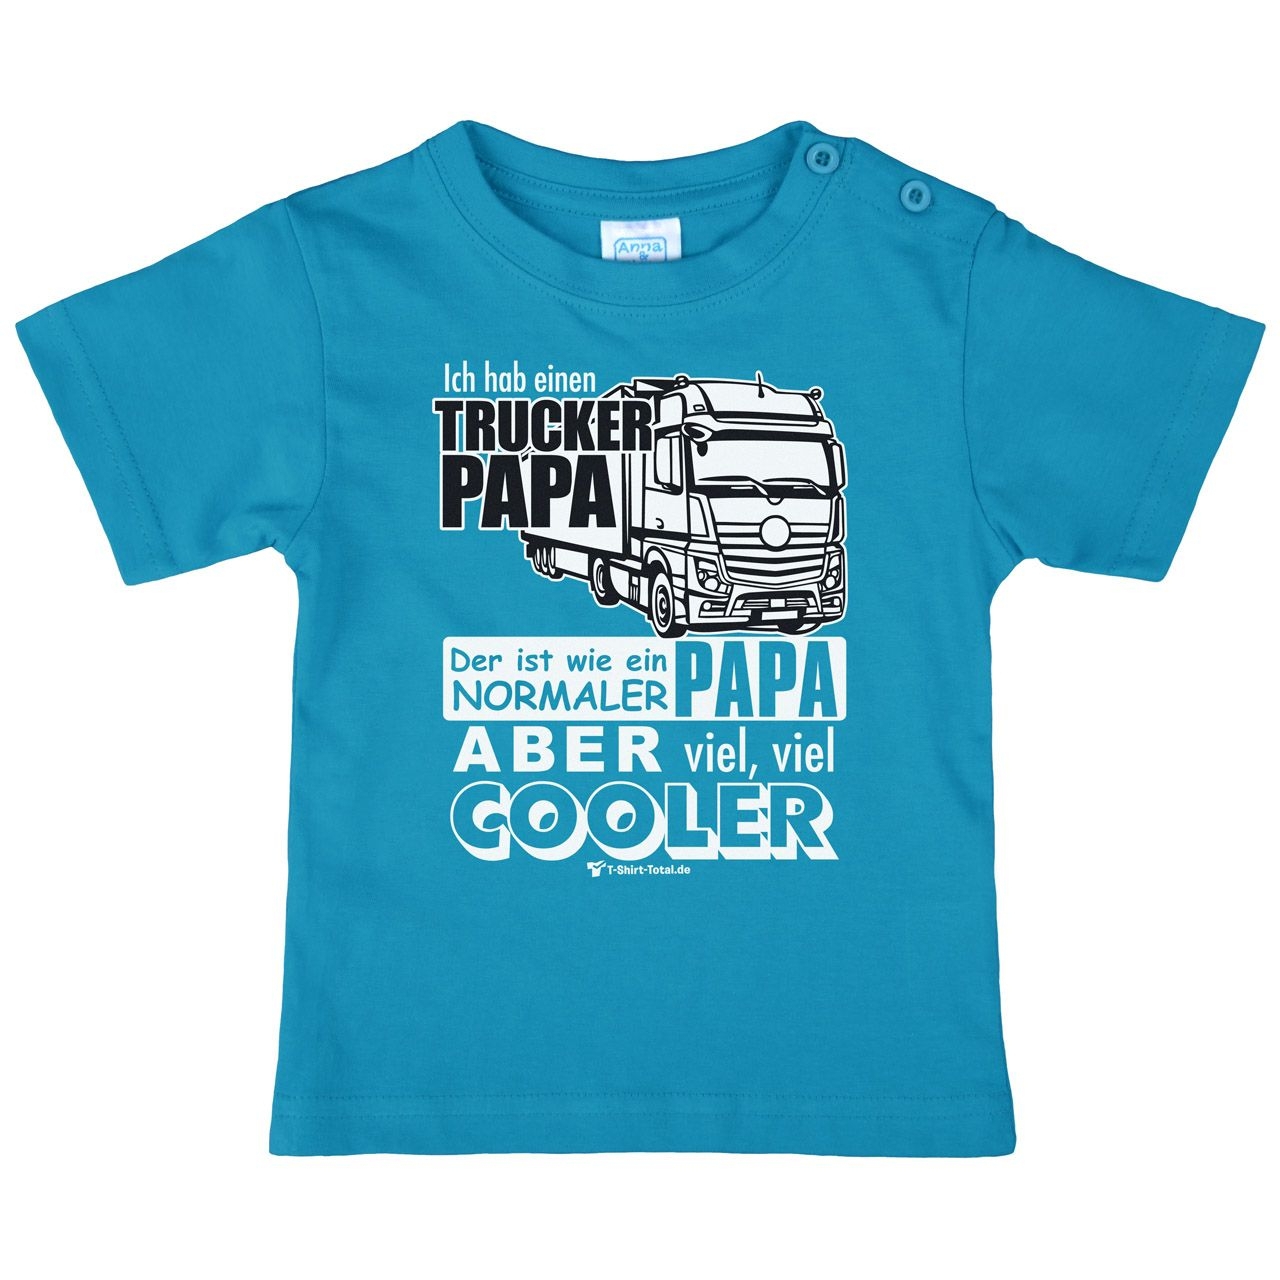 Trucker Papa Kinder T-Shirt türkis 68 / 74